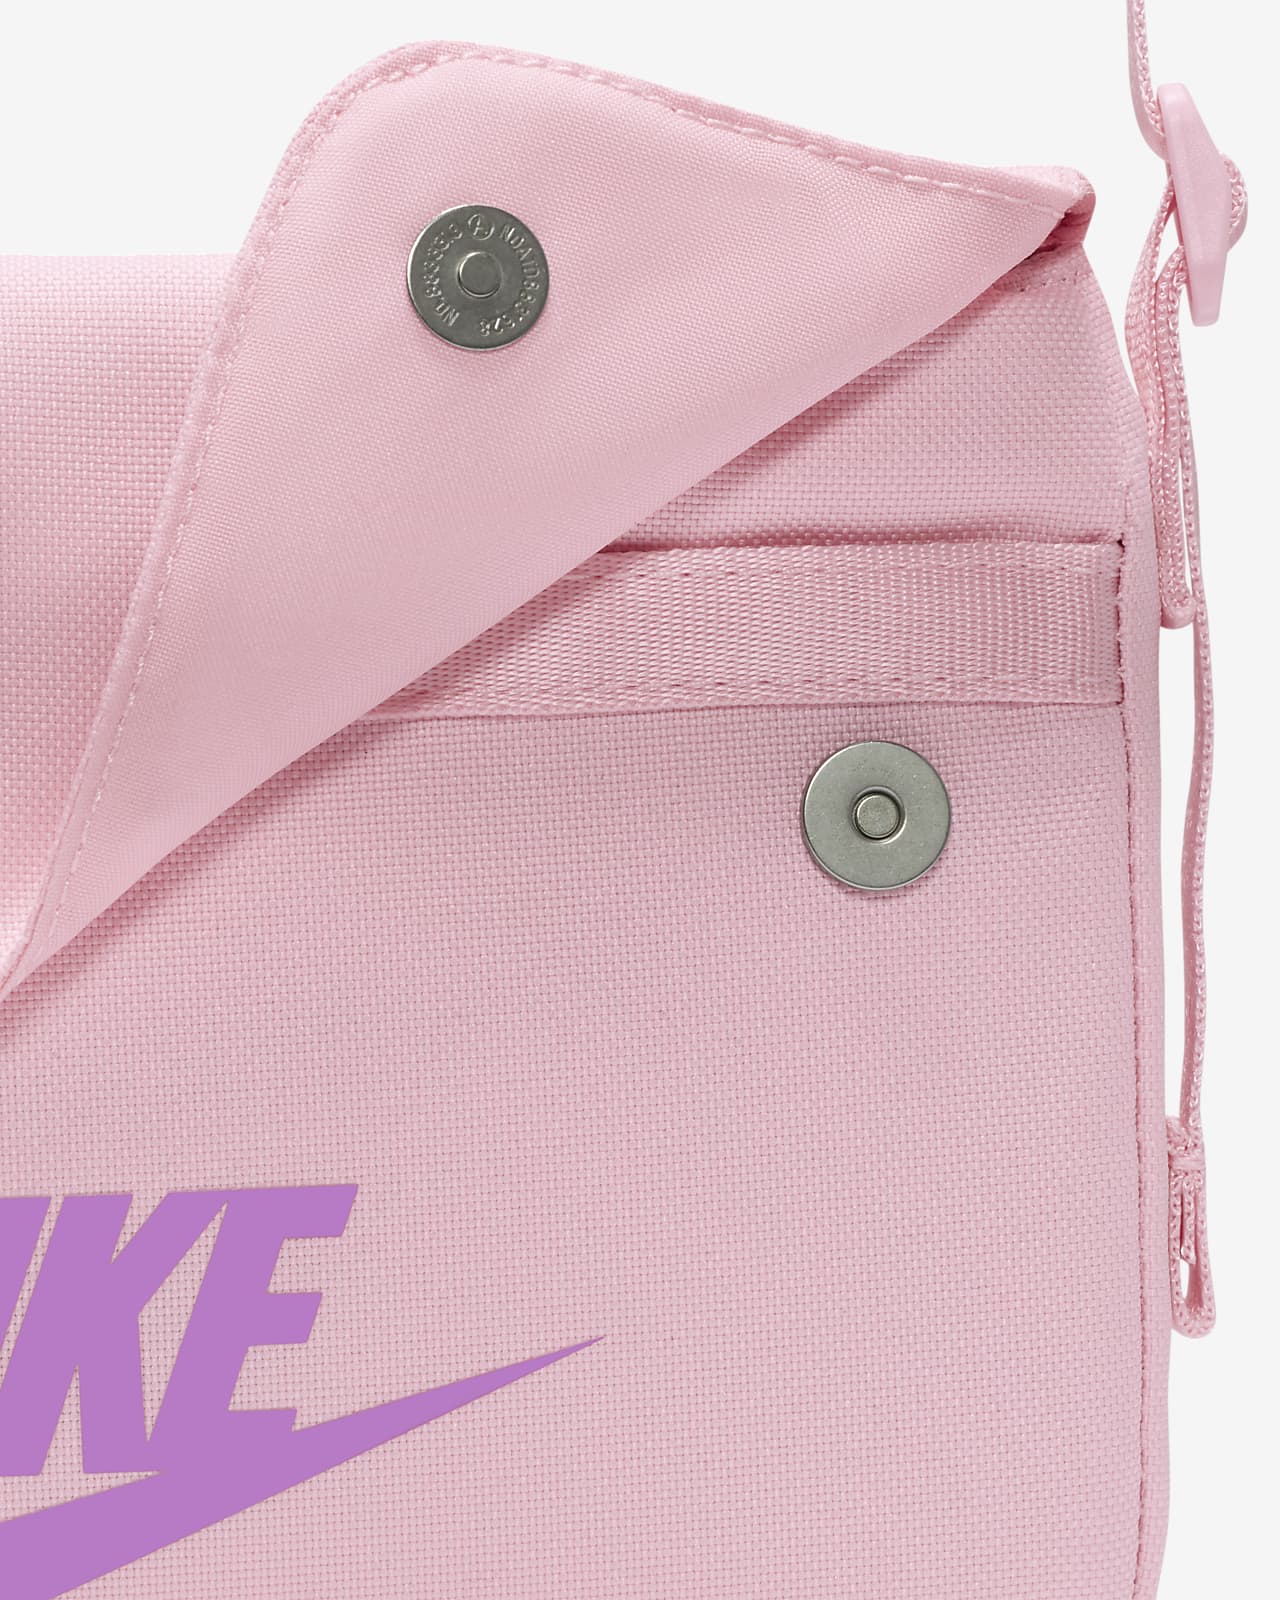 Nike Sportswear Futura 365 Cross-body Bag (3L)